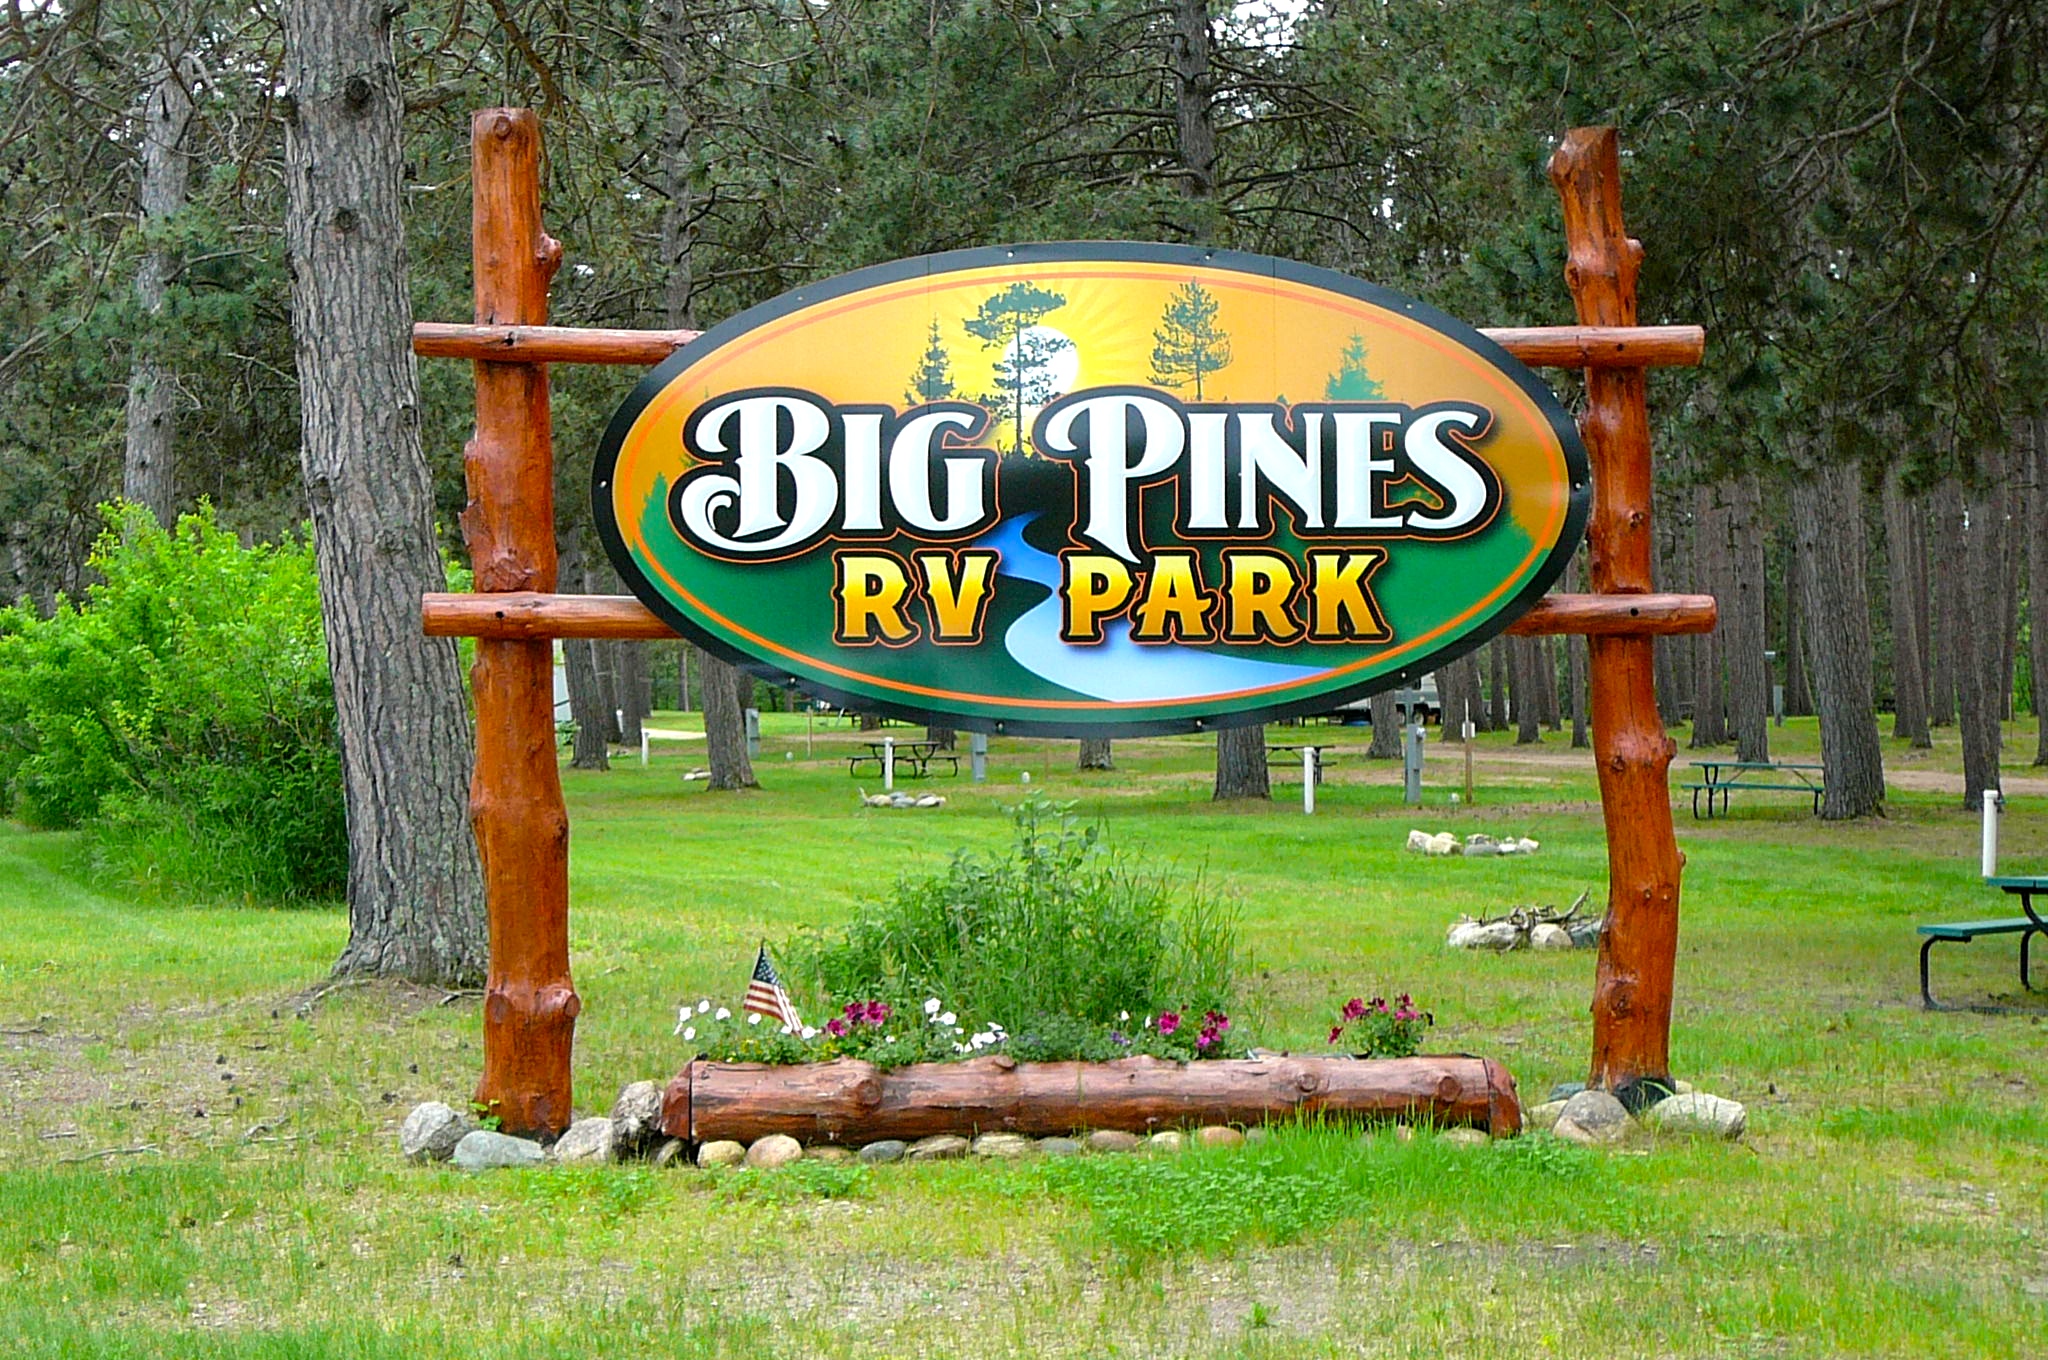 Big Pines RV Park in Park Rapids, MN.